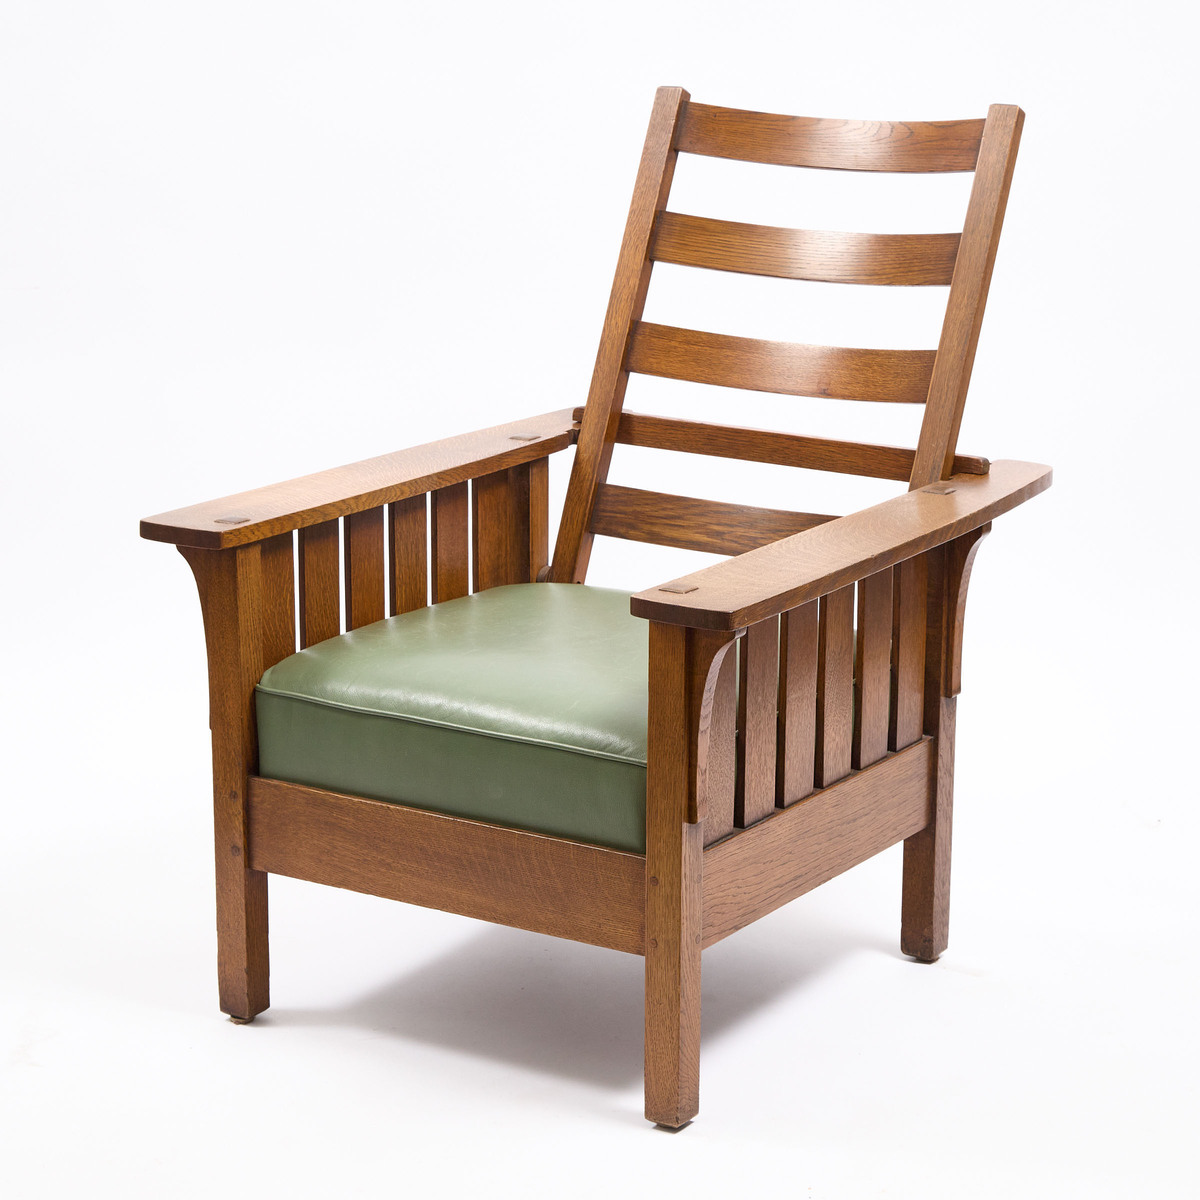 L. & J. G. Stickley Model 471 Oak Morris Chair, c.1912, 43 x 31.75 x 36 in — 109.2 x 80.6 x 91.4 cm - Image 2 of 2